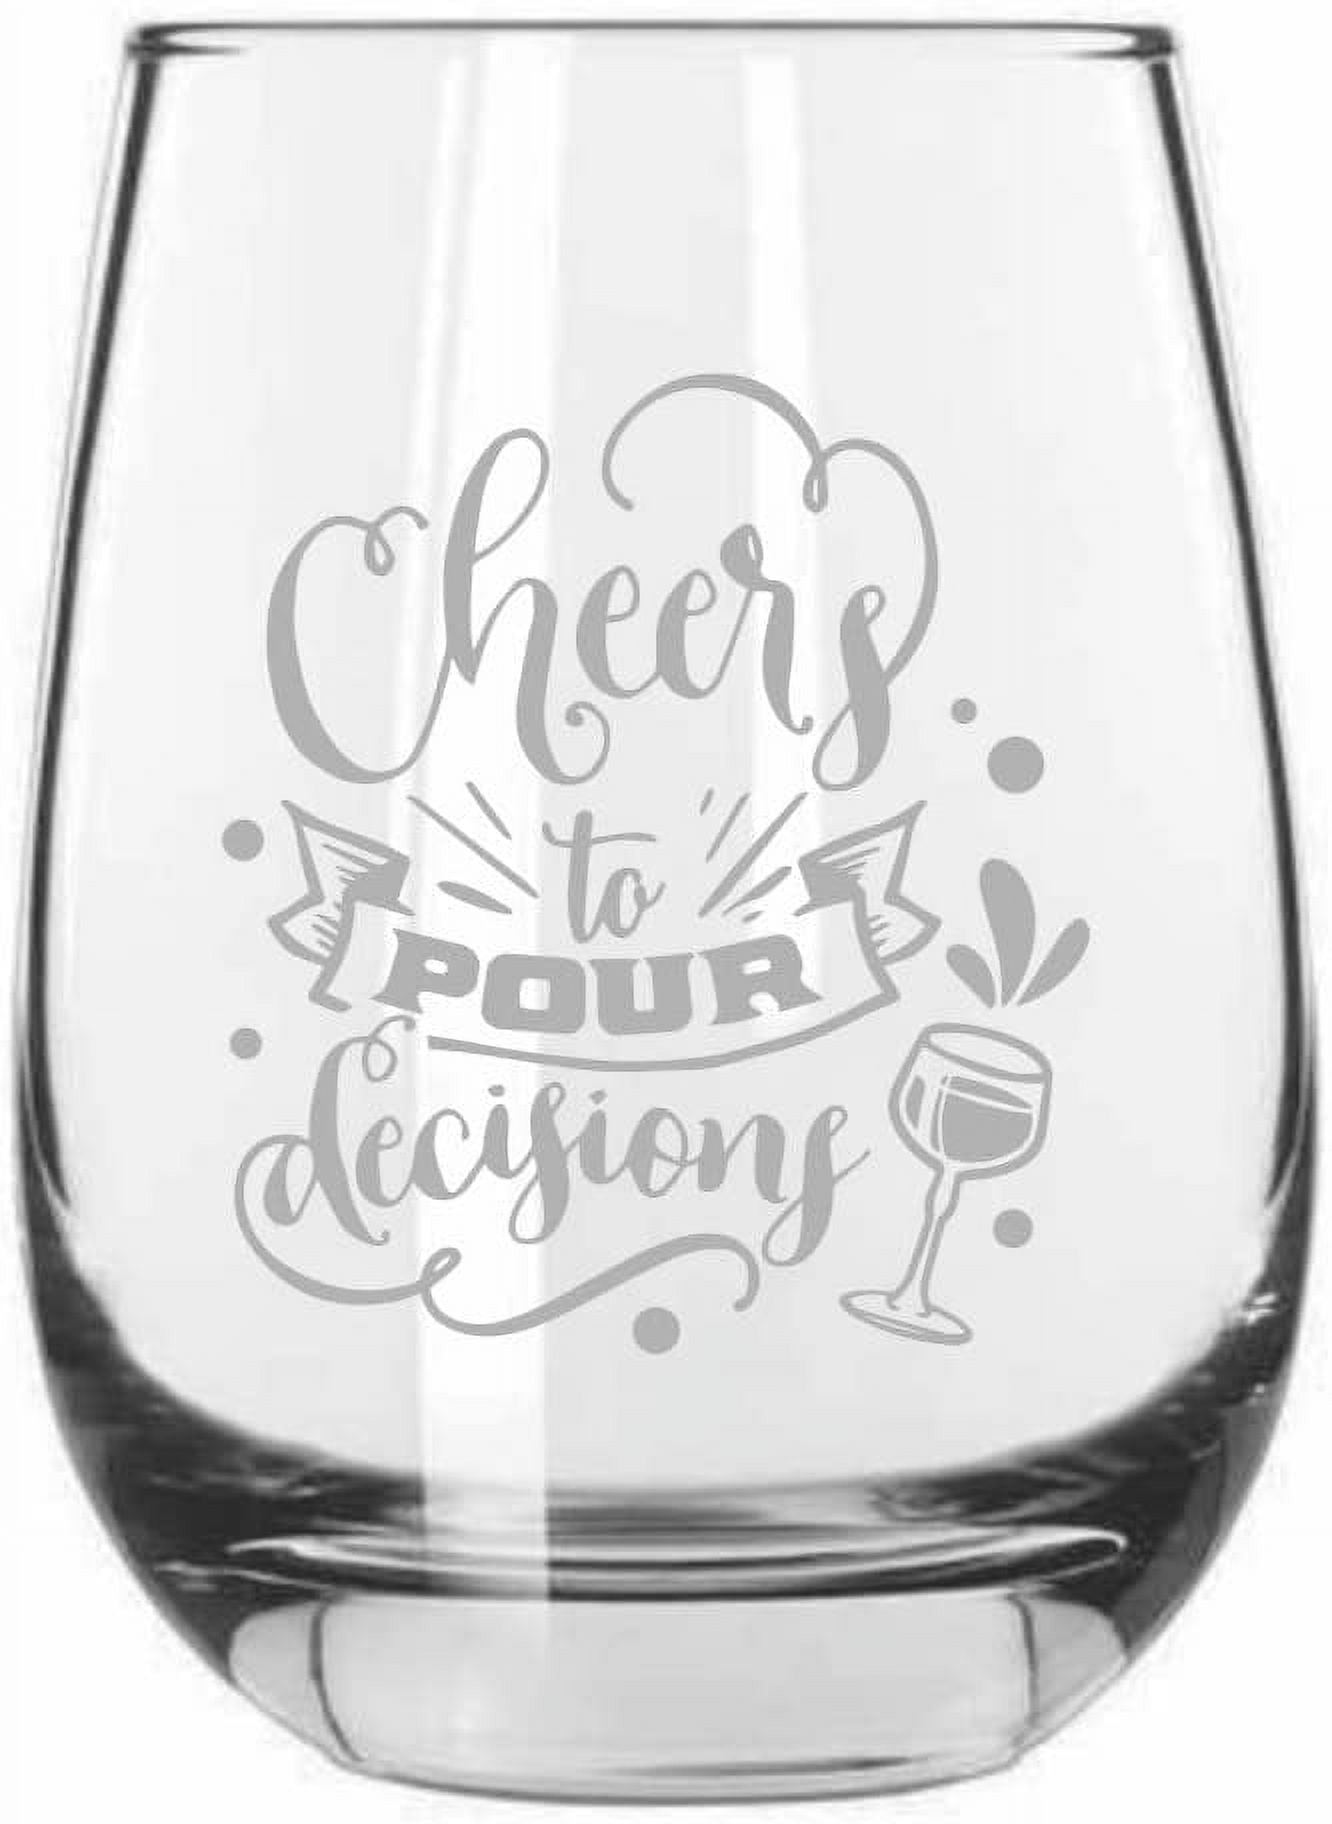 Stackable Acrylic Wine Glasses - Cheers